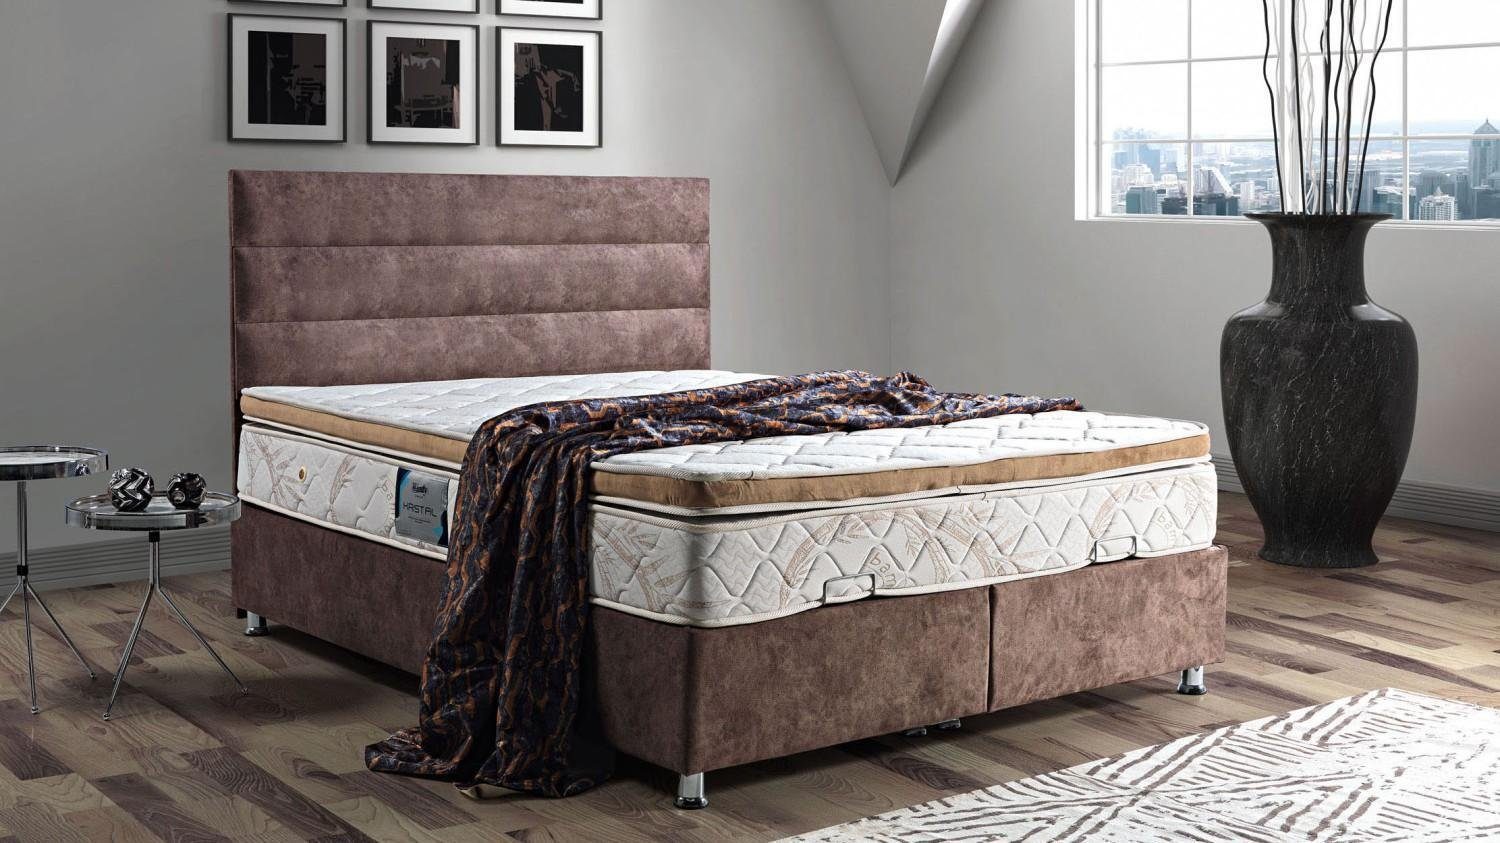 JVmoebel Bett Bett Design Betten Luxus Bettkasten Polster Schlafzimmer Möbel Stoff (Bett), Made In Europe